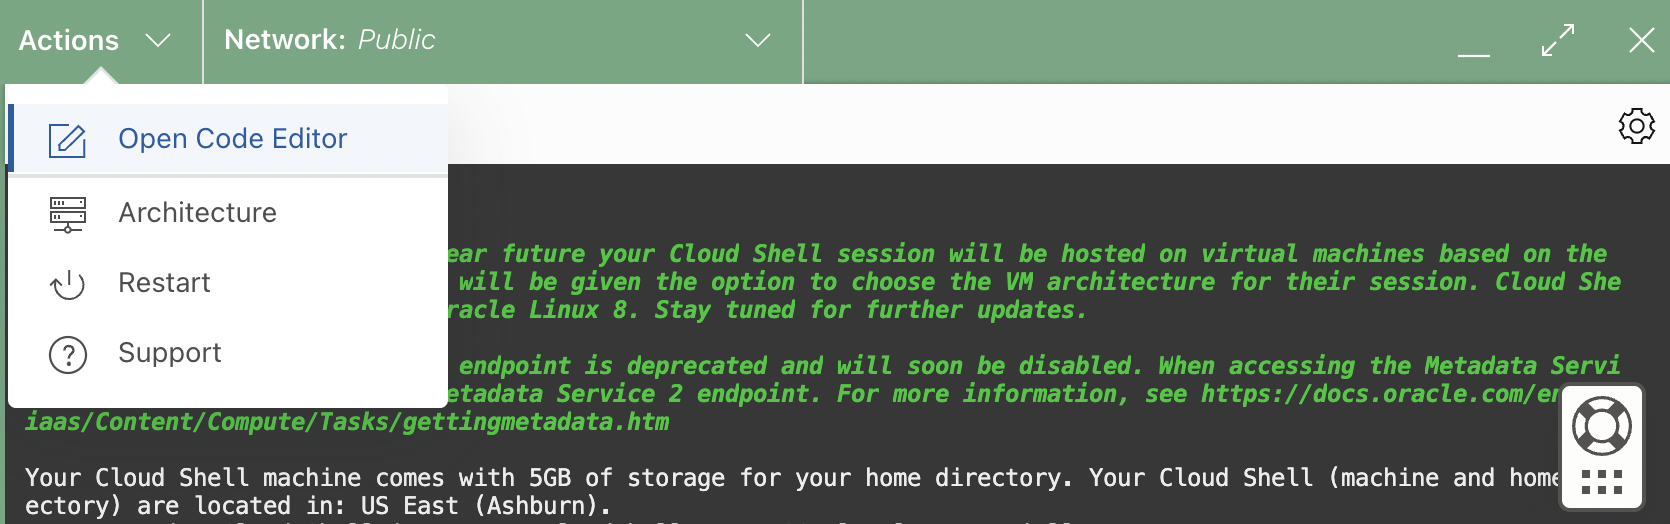 Menú de acción de arquitectura de Cloud Shell